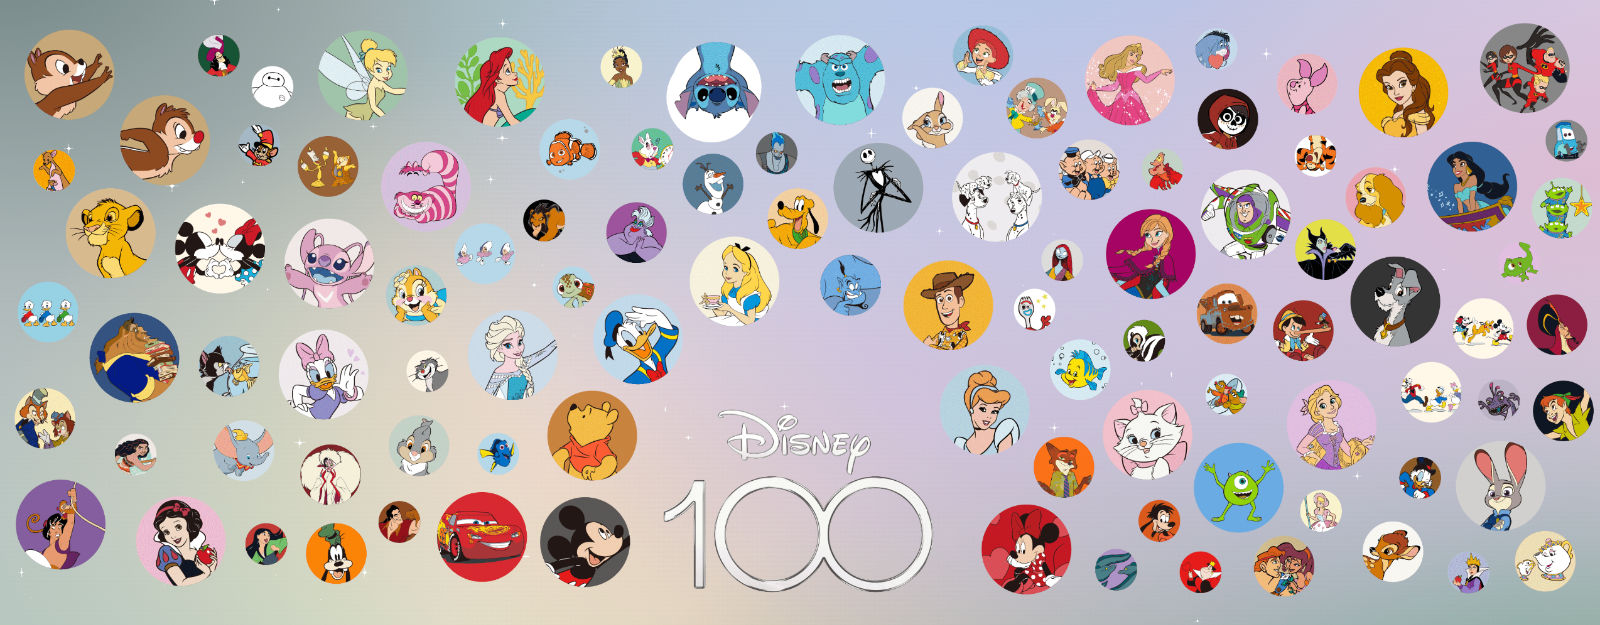 Disney 100 Years of Wonder x Samantha thavasa 100 Kinds Hand Bag Flower Bambi